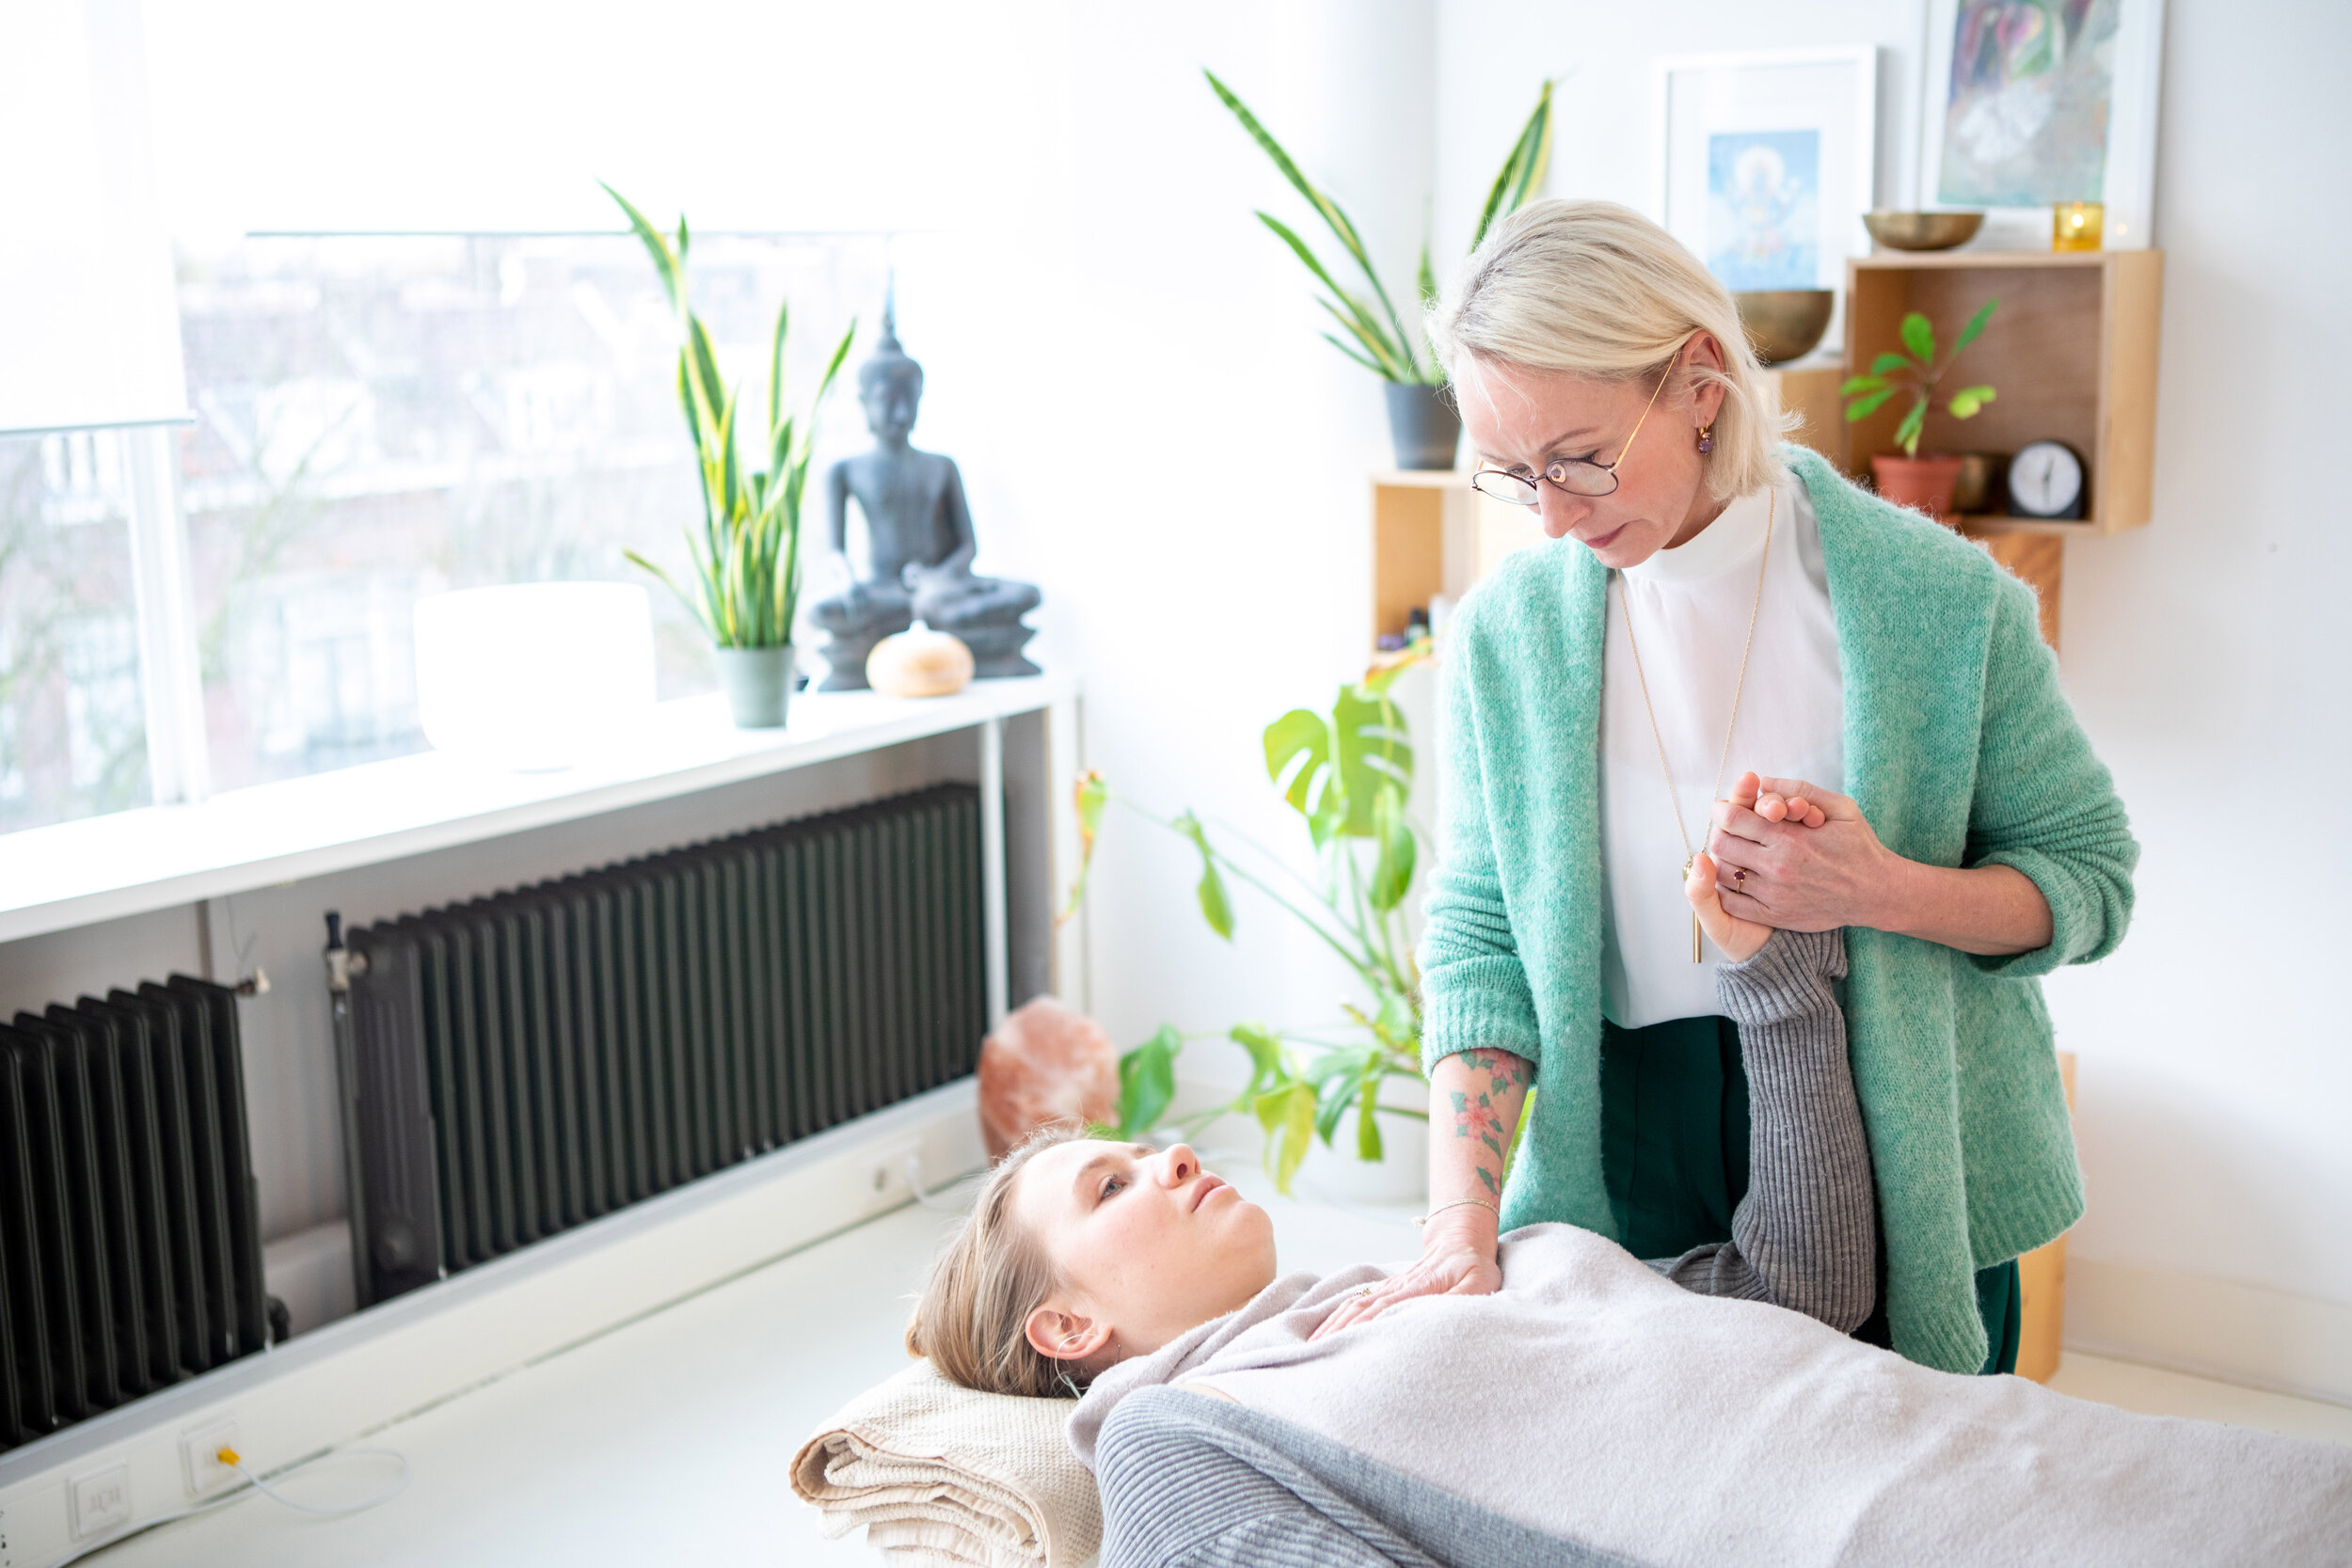 massage therapy ariane grigo rotterdam